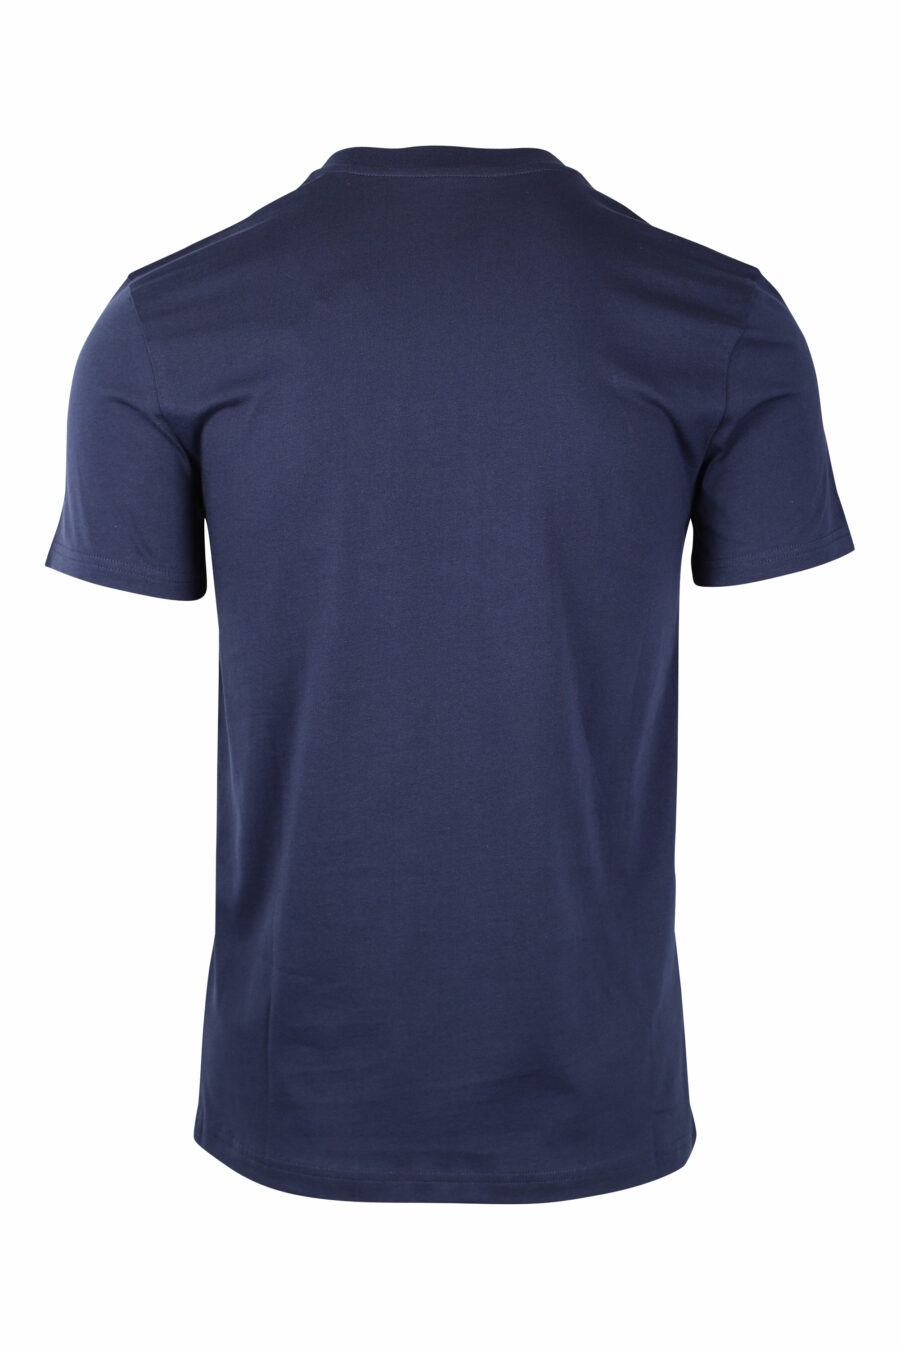 Dark blue T-shirt with monochromatic double question maxilogo - IMG 1454